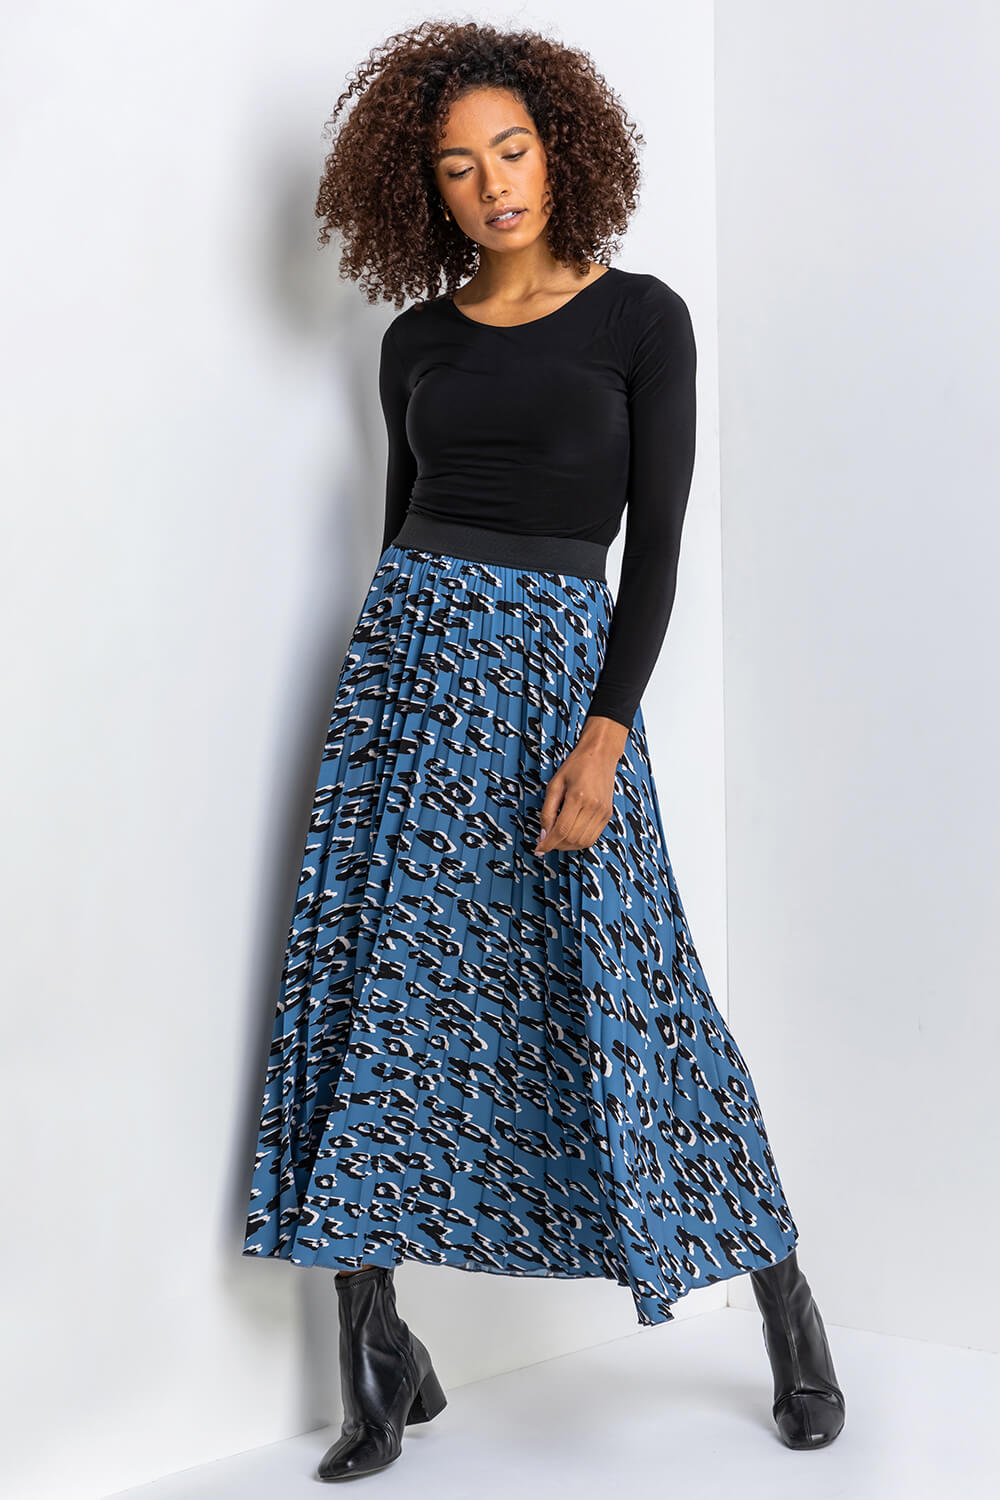 leopard print skirt very